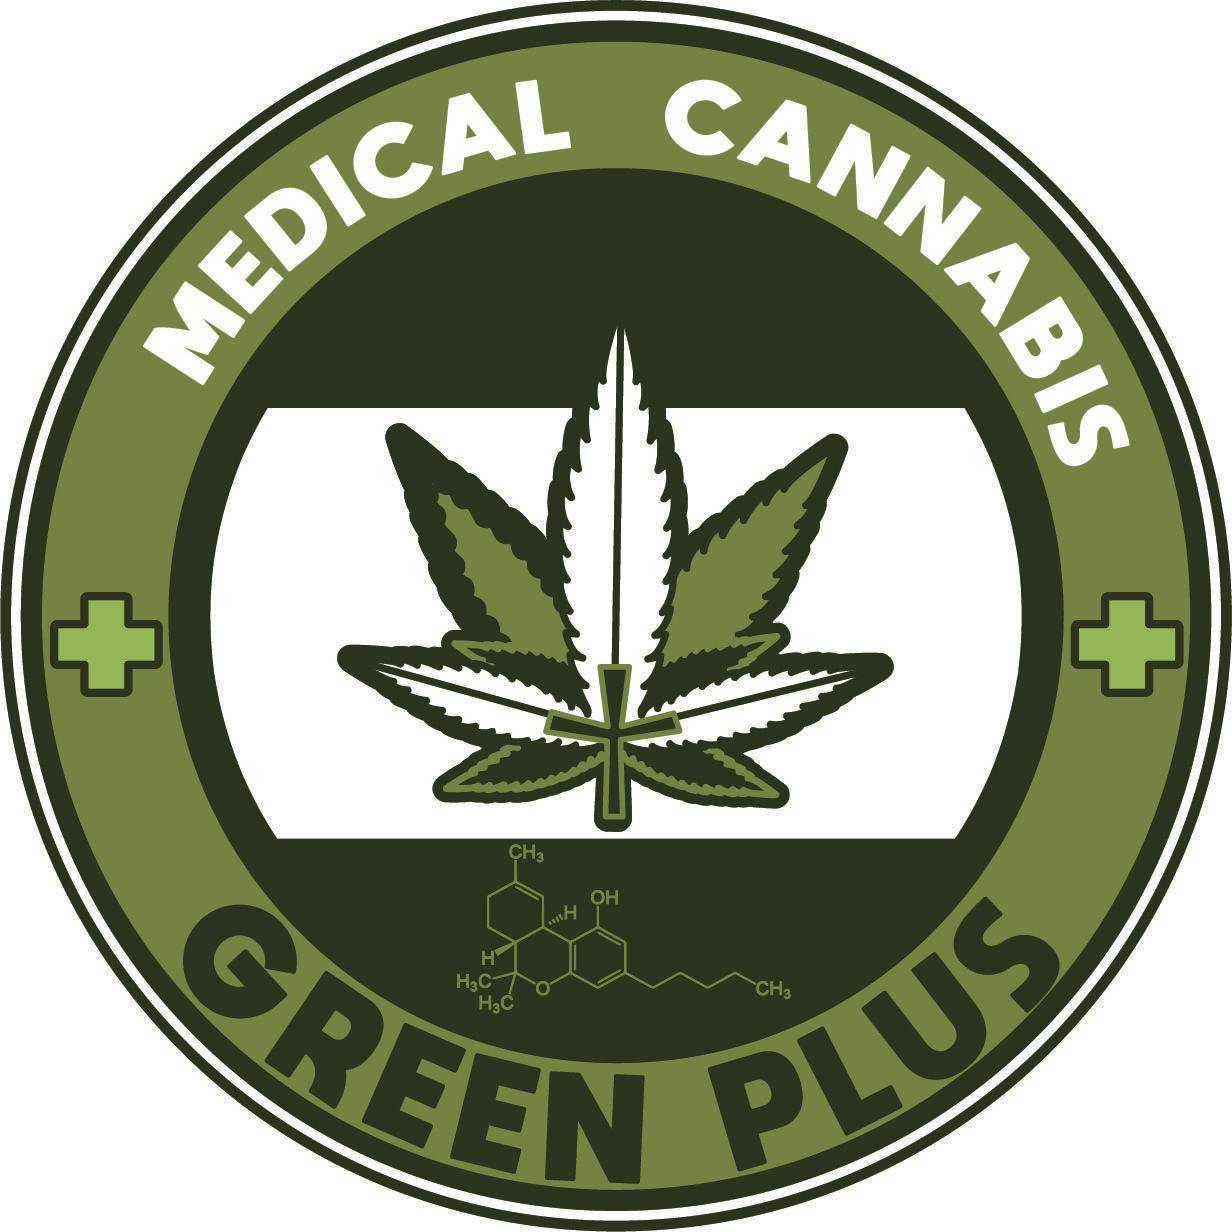 Green Plus logo